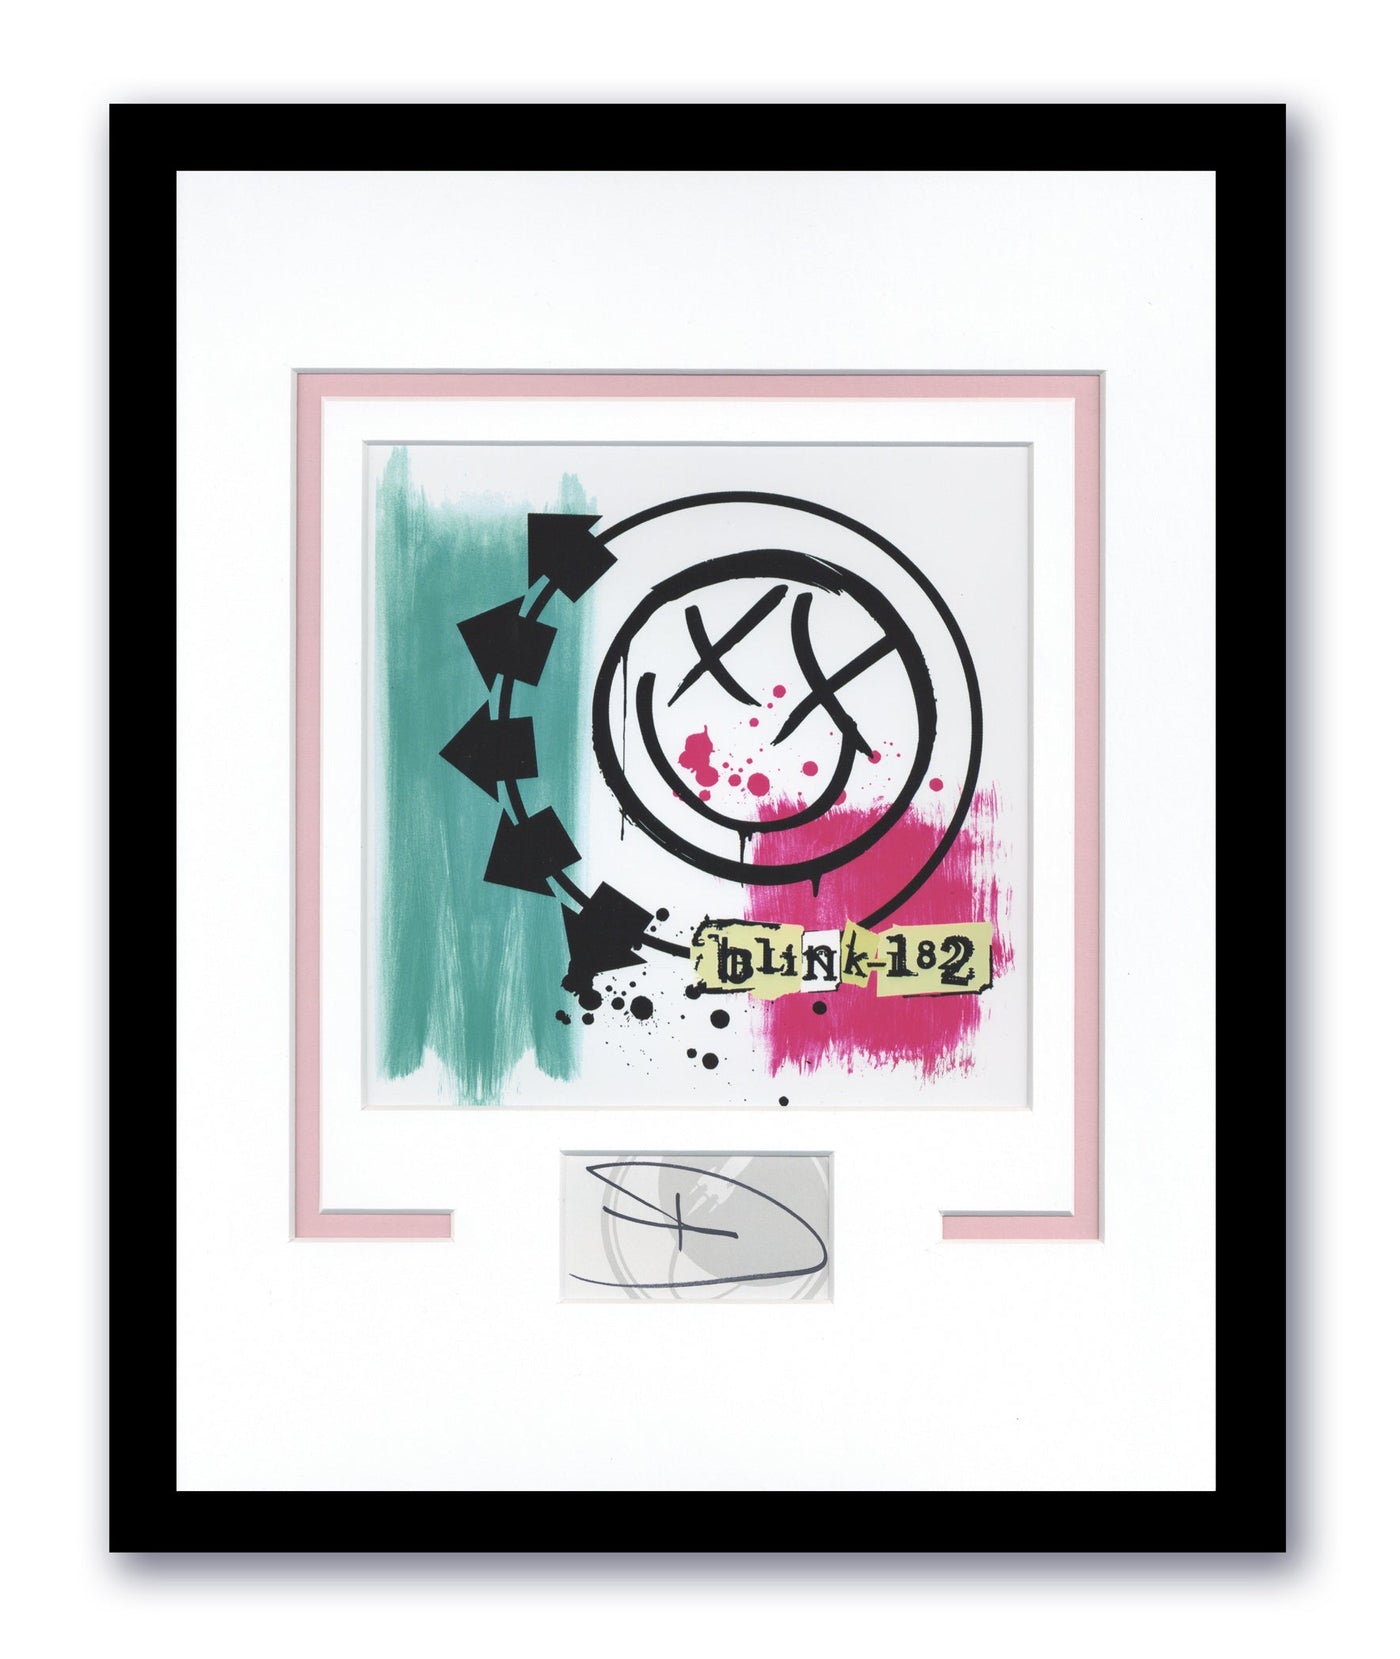 Blink-182 Tom DeLonge Autographed Signed 11x14 Custom Framed Photo ACOA